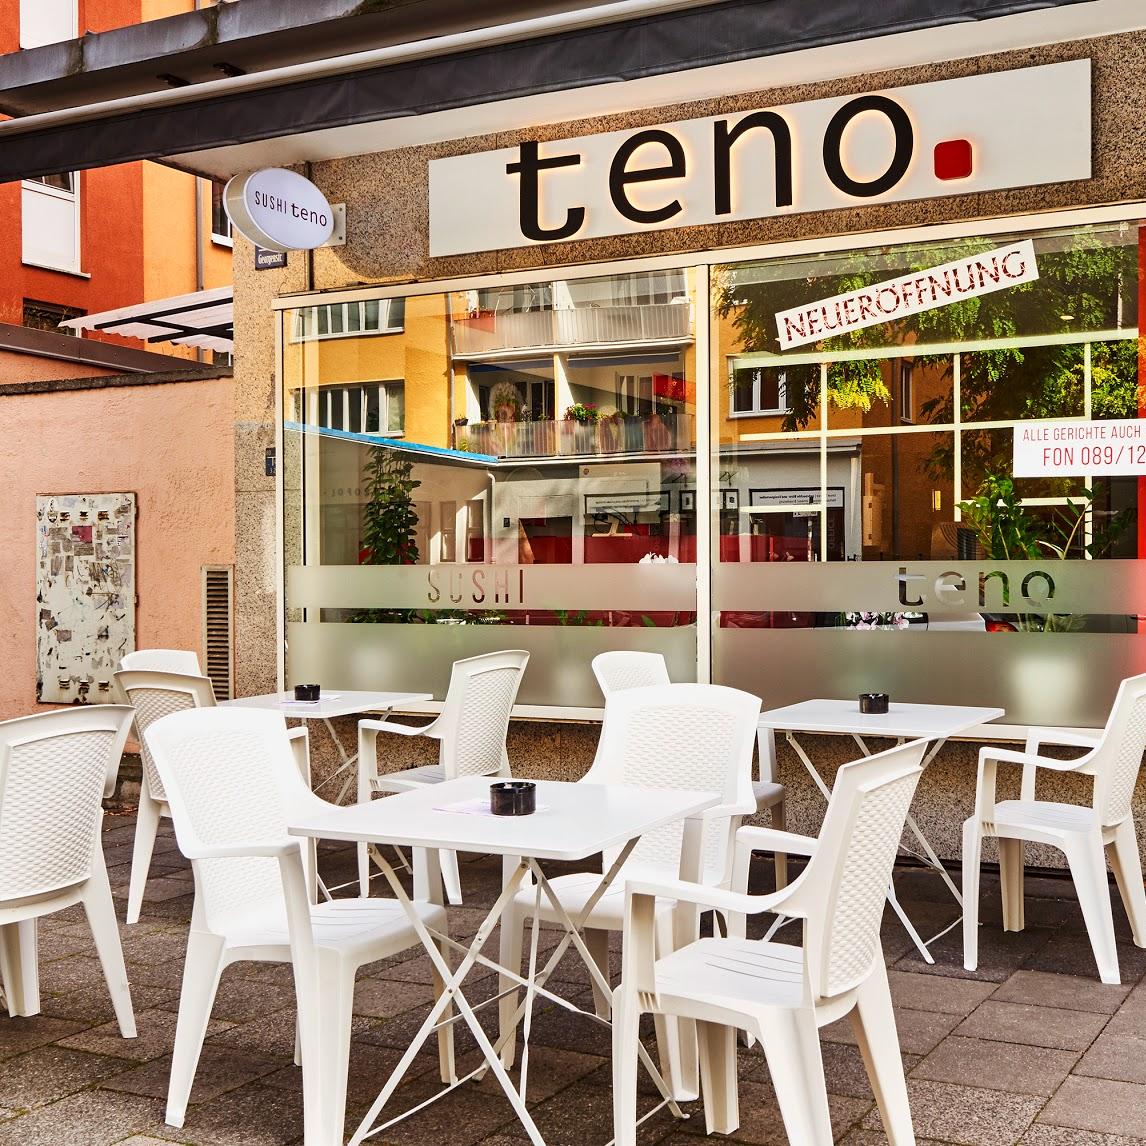 Restaurant "Sushi Teno" in München